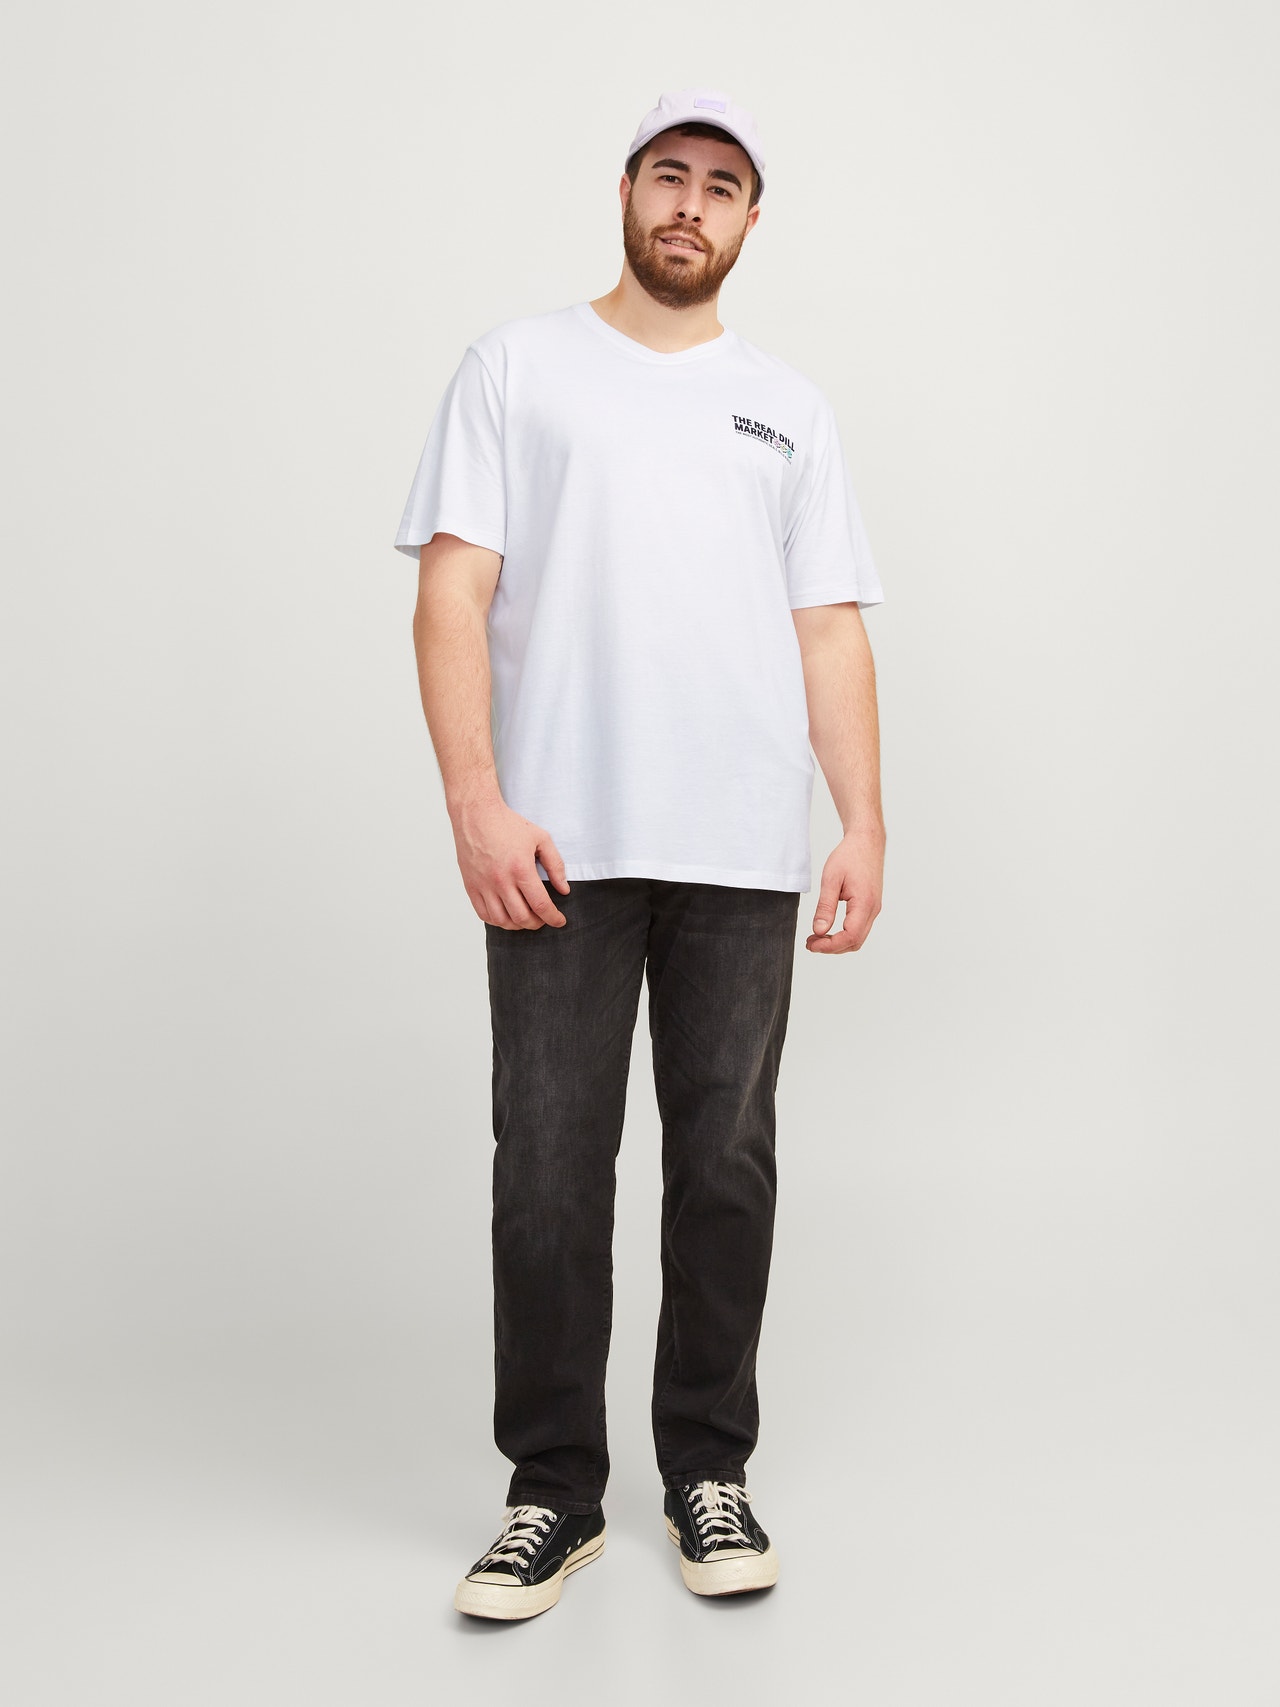 Jack & Jones Plus Size Printed T-shirt -Bright White - 12257565